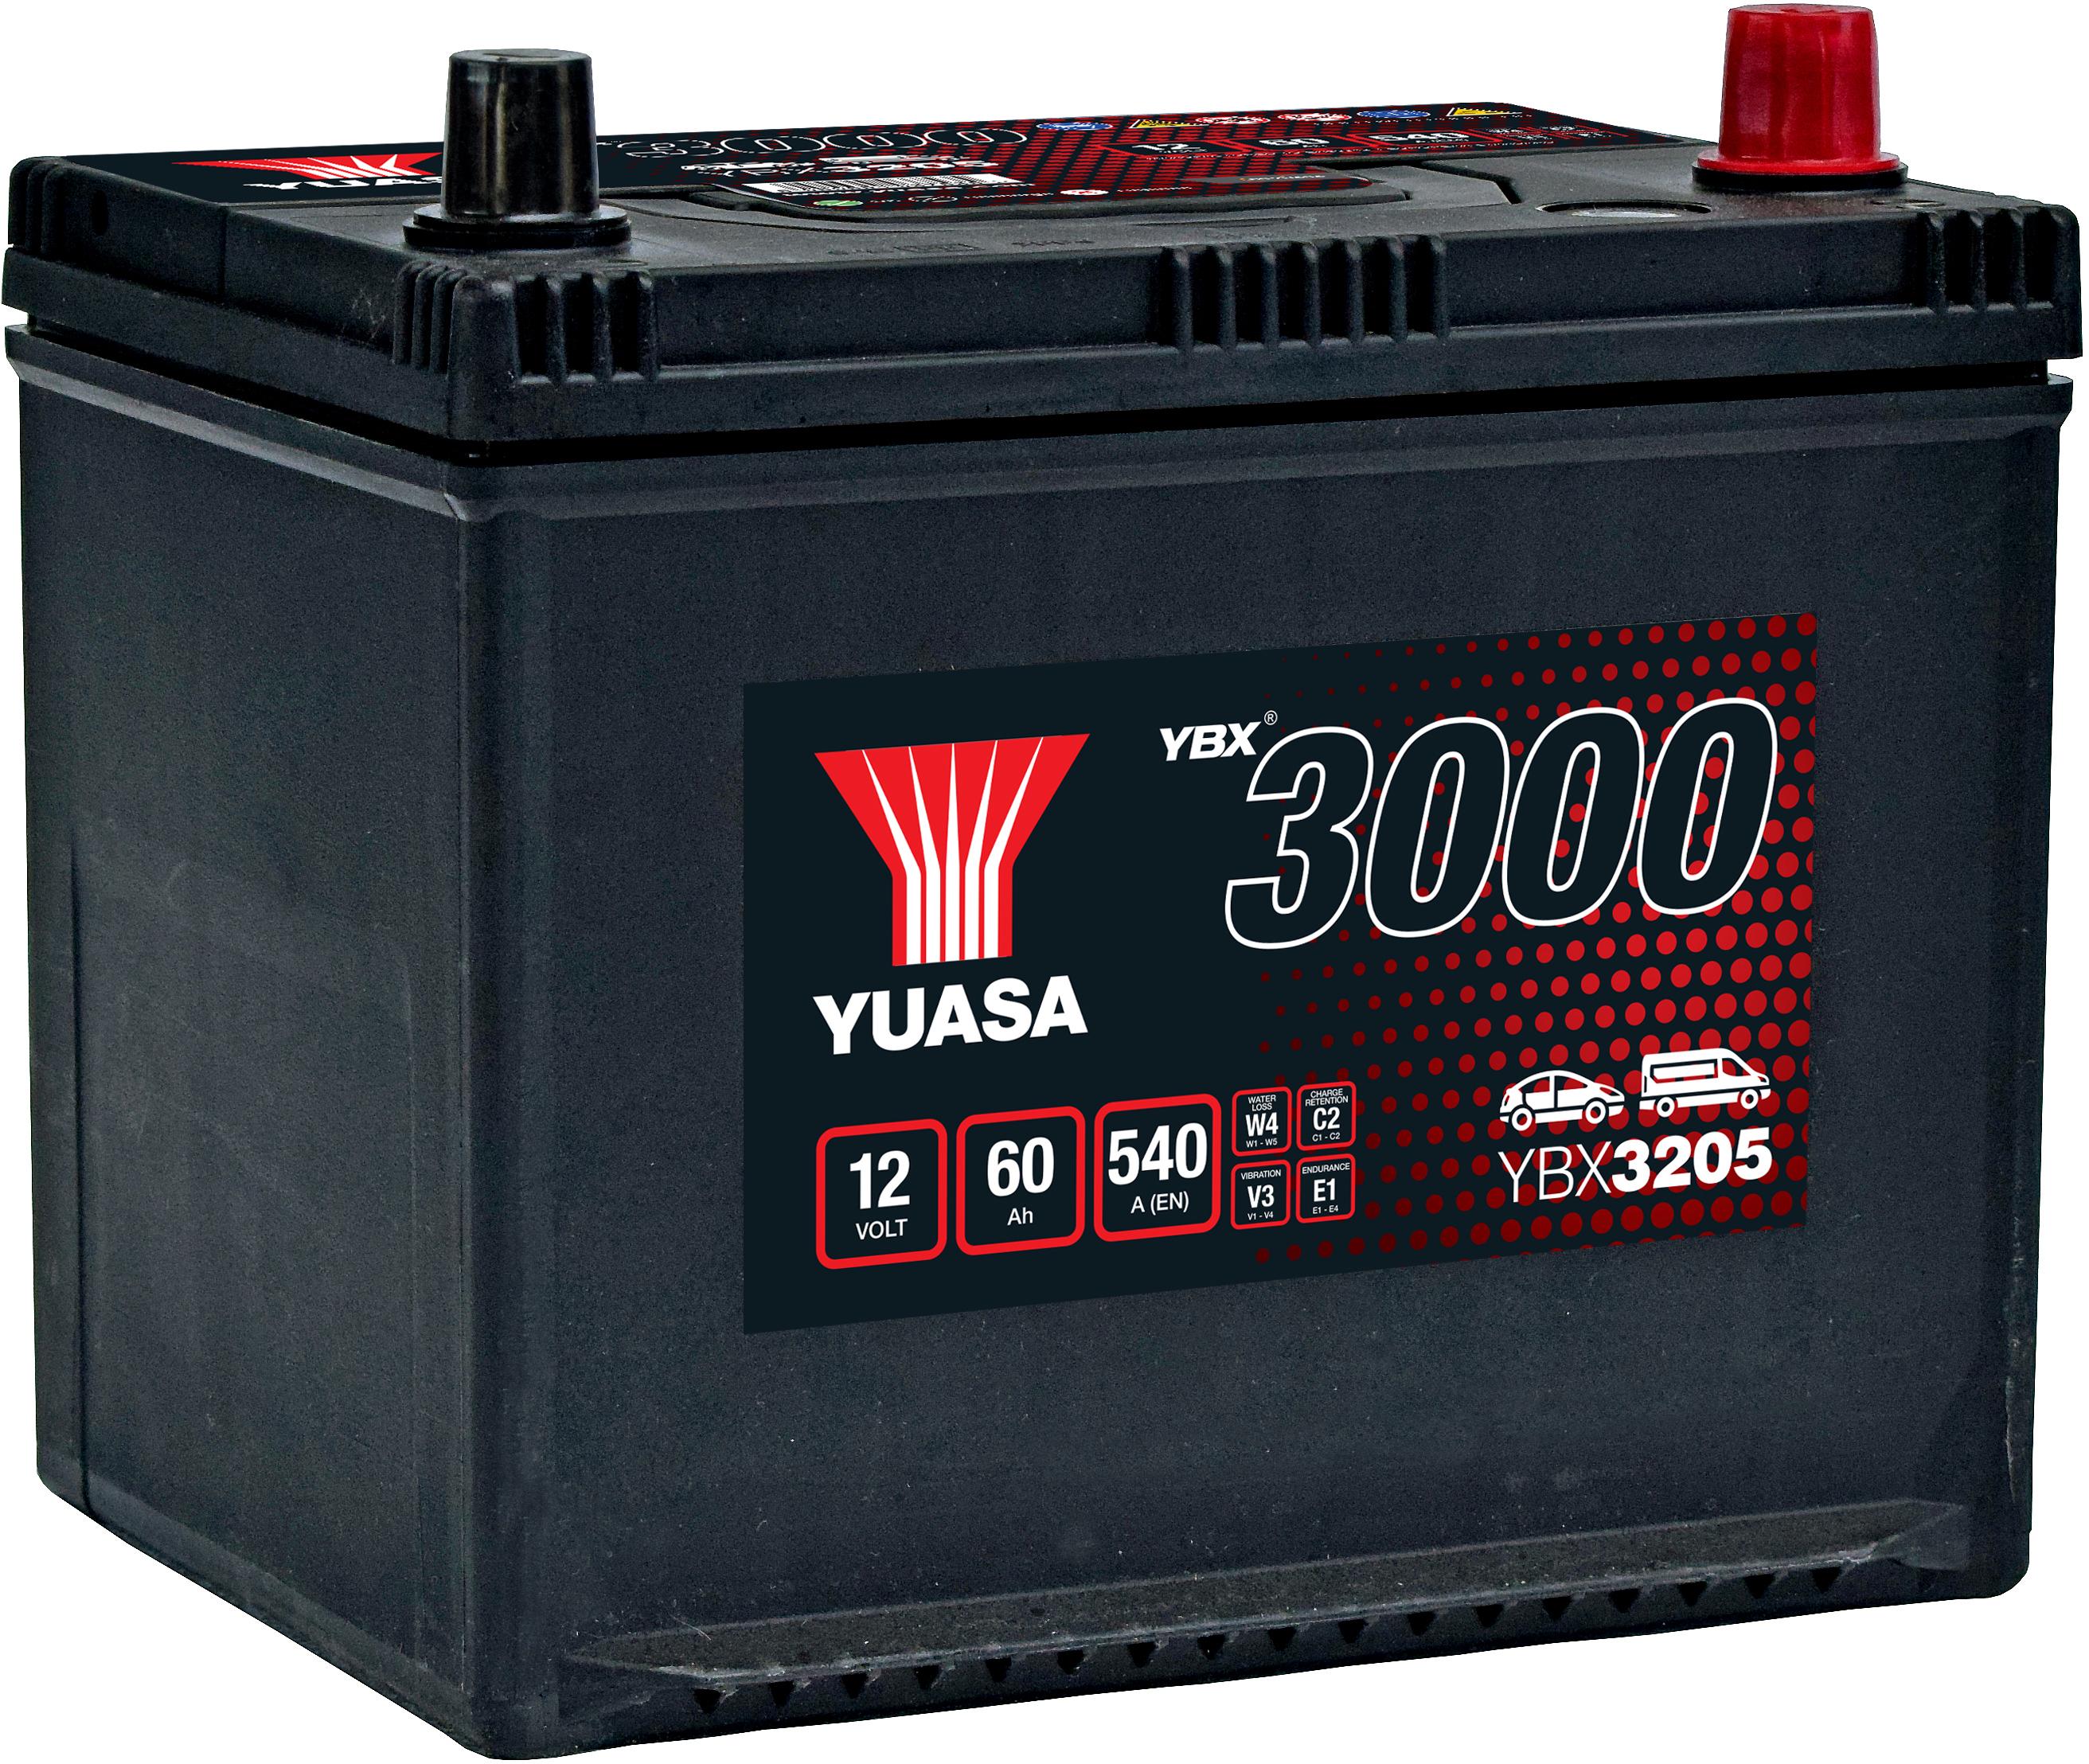 Ybx3205 12V 60Ah 540A Yuasa Smf Battery